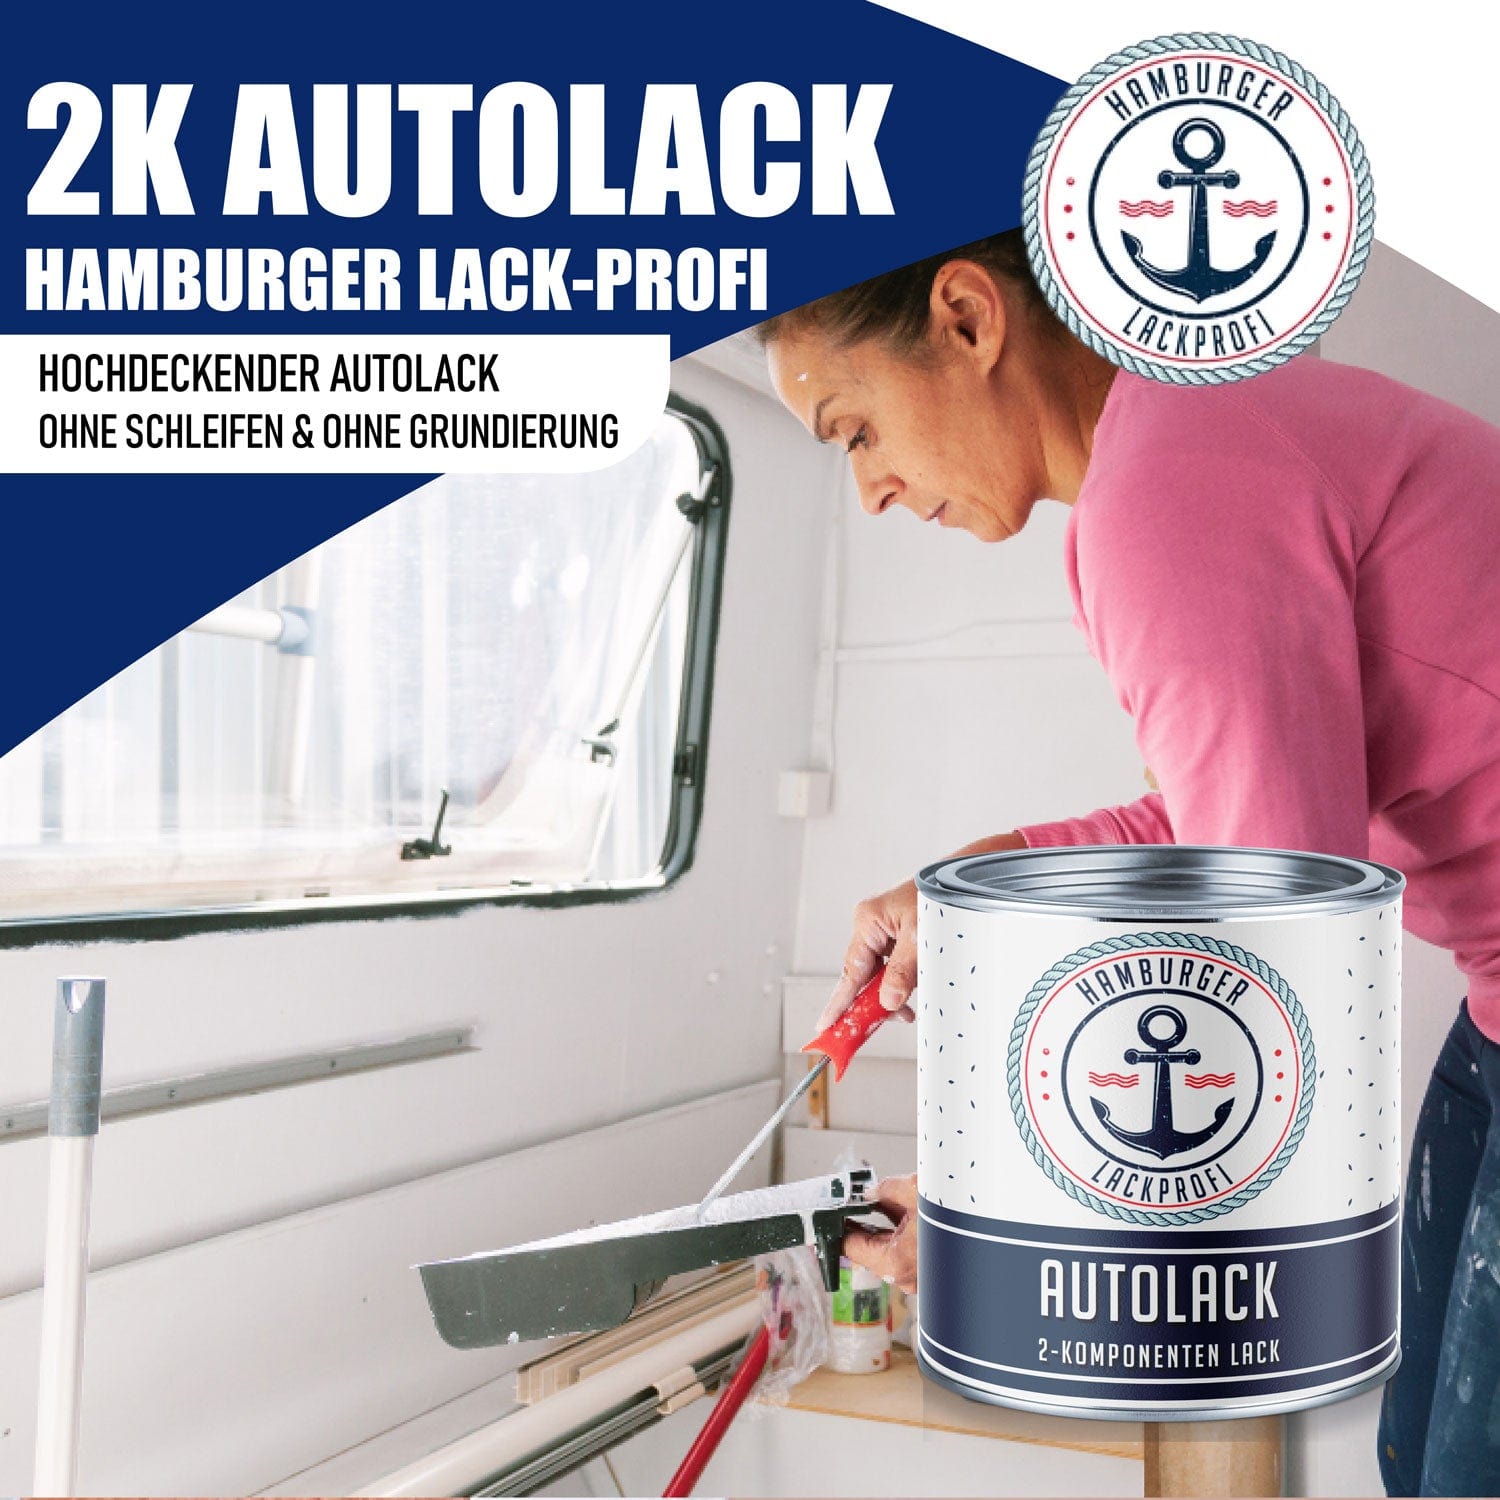 Hamburger Lack-Profi Lacke & Beschichtungen Hamburger Lack-Profi 2K Autolack in Terrabraun RAL 8028 mit Lackierset (X300) & Verdünnung (1 L) - 30% Sparangebot